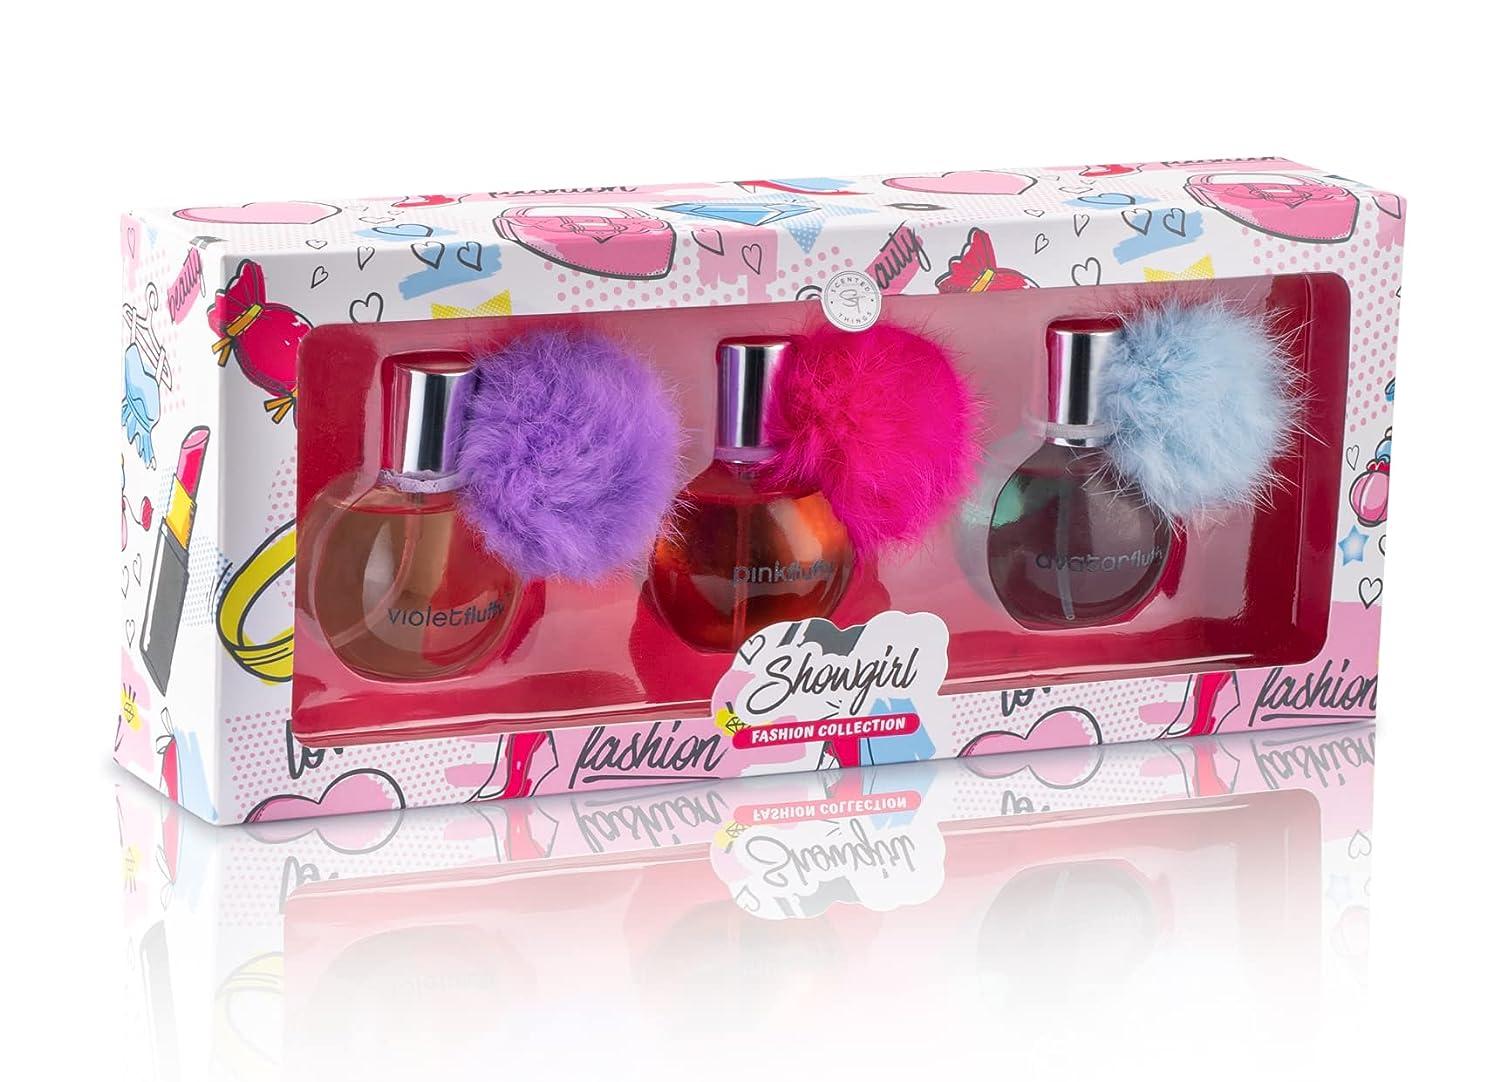 Showgirl Body Spray Girl Perfume Set | Little Girls to Teen Girl Gifts,  Girl Birthday Gift, Body Mist Perfume Set with Fur Pom-Pom Puff Ball |  Fashion